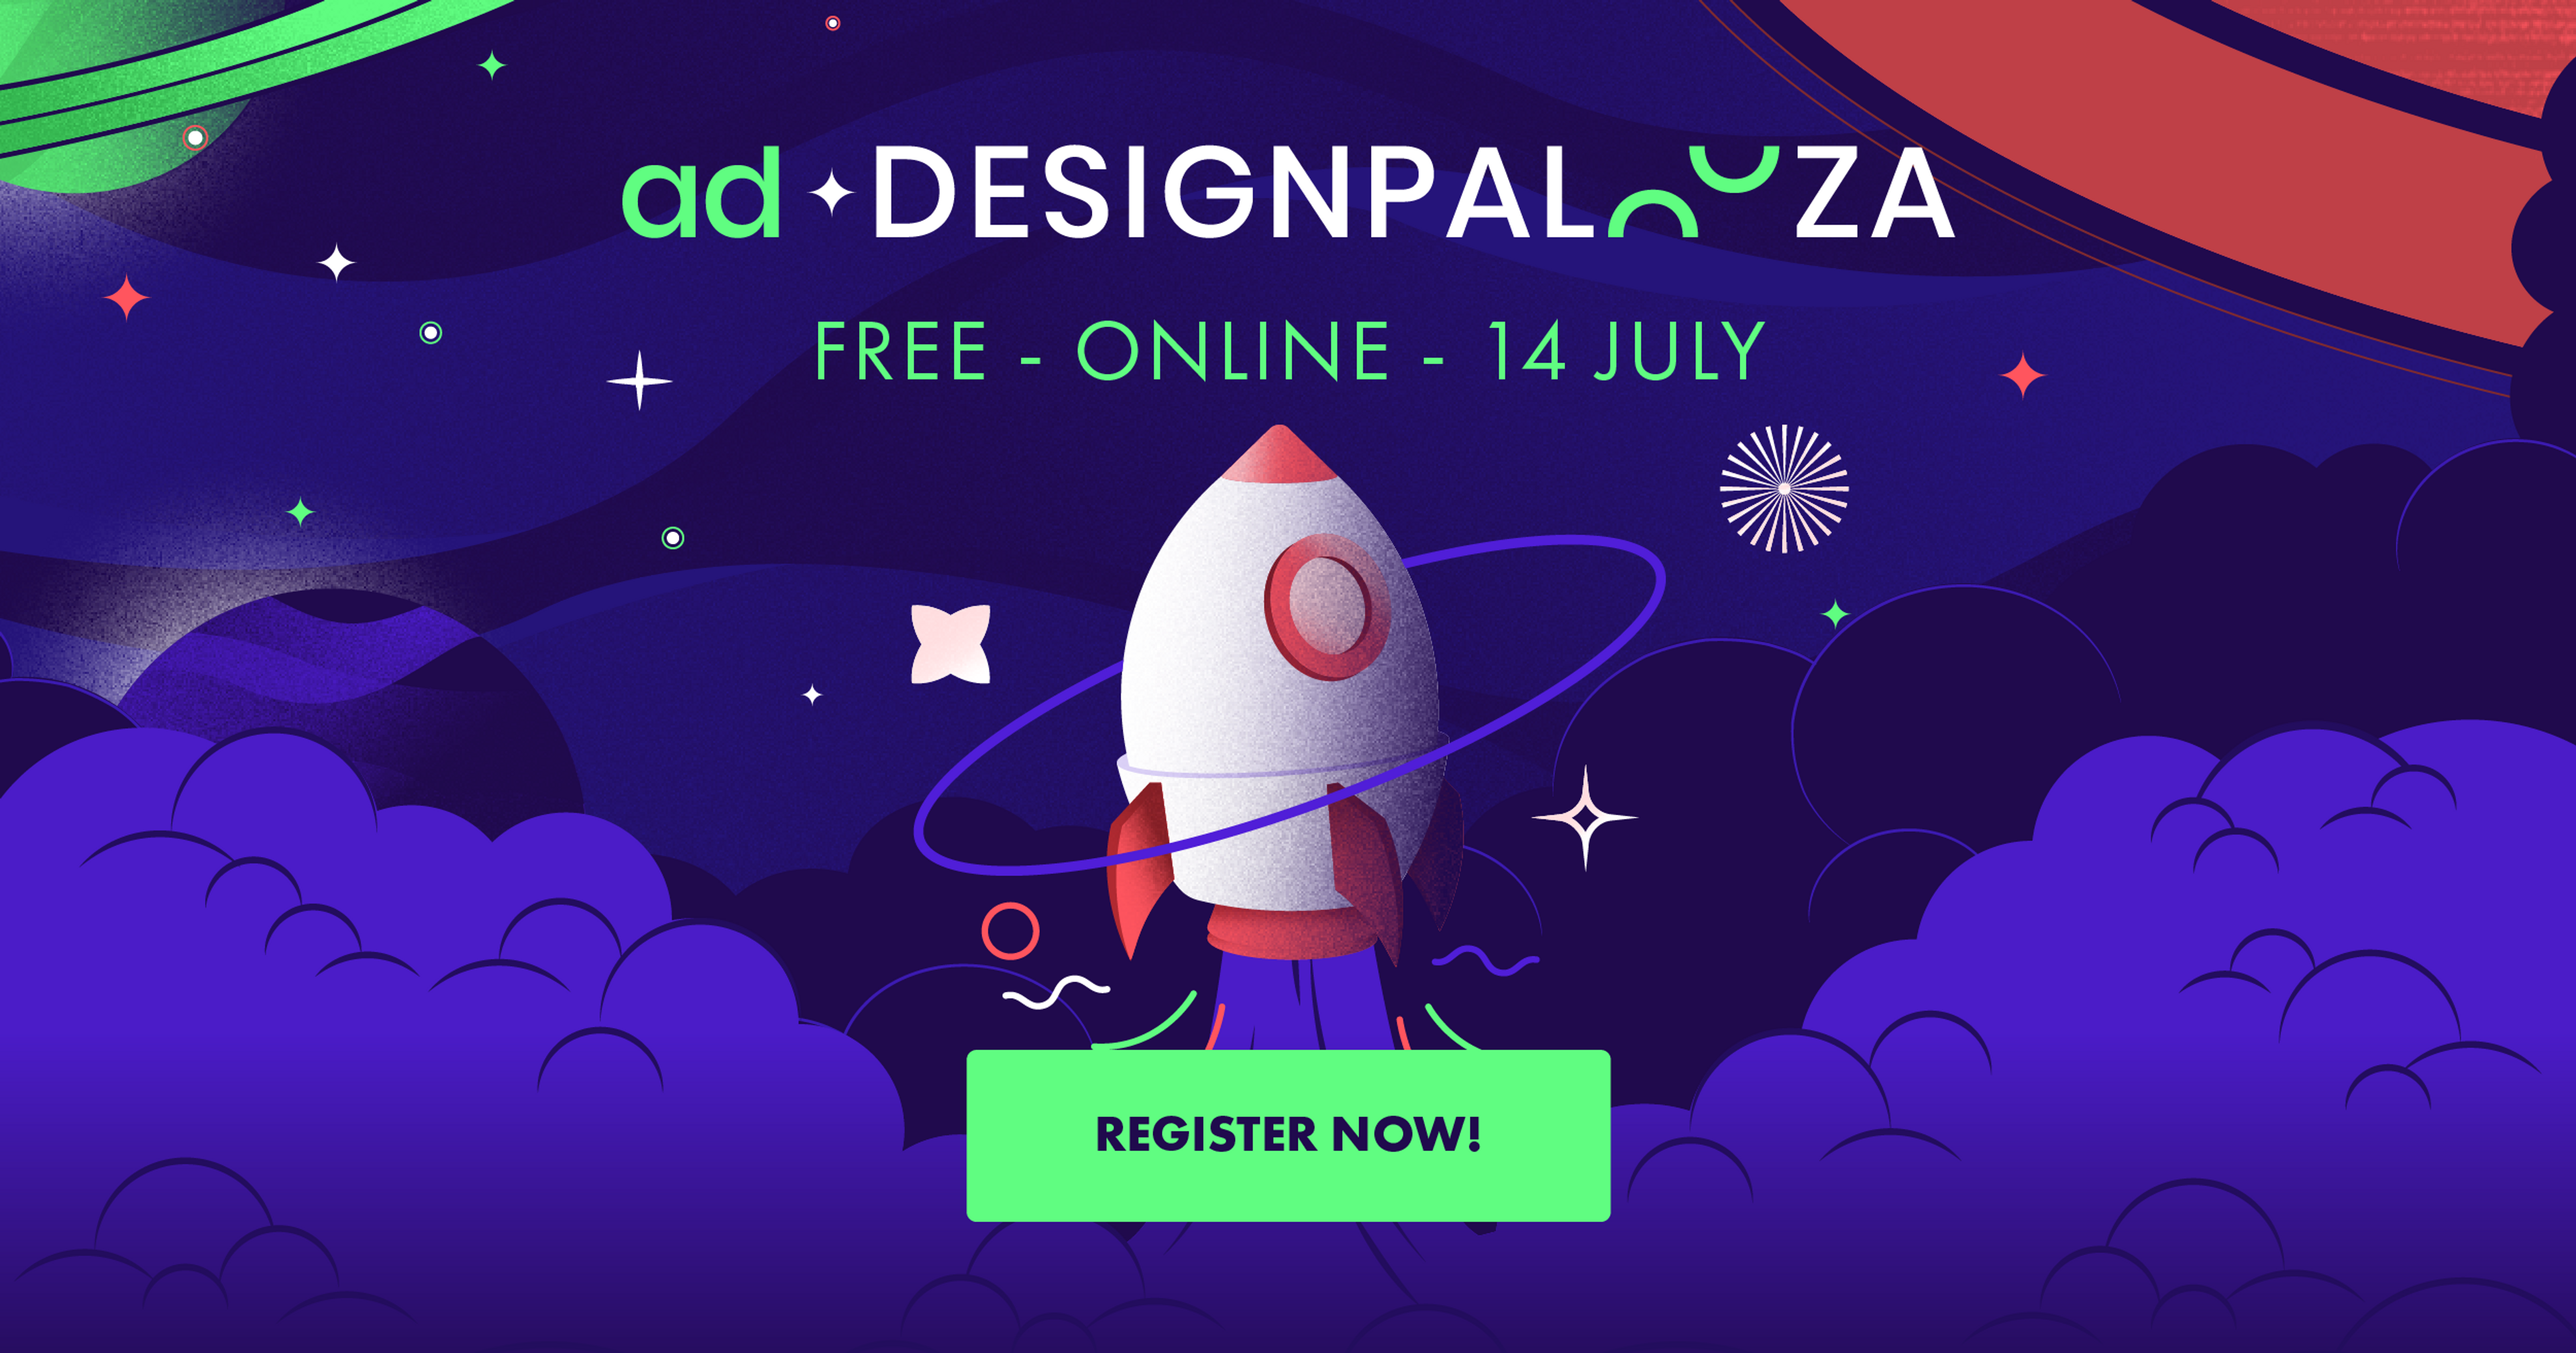 Ad Designpalooza Online Event